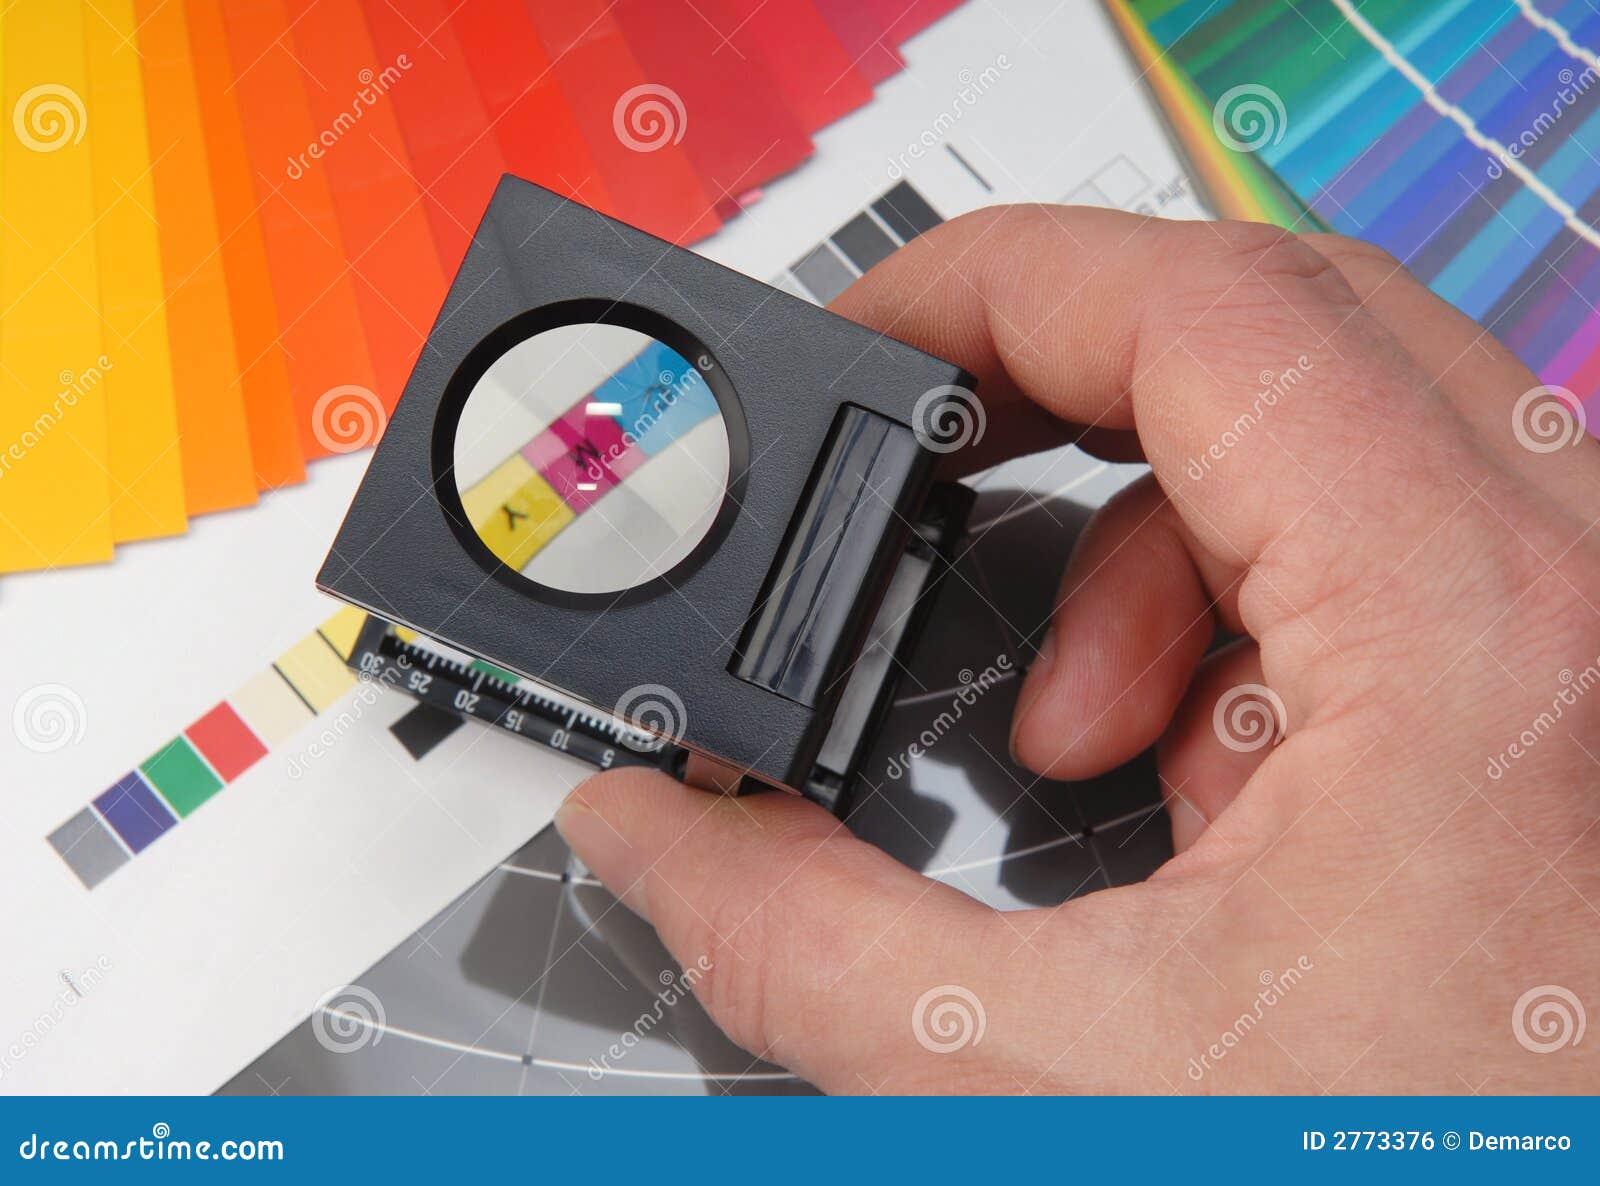 Typometer stock photo. Image of advertisement, graphic - 2778694